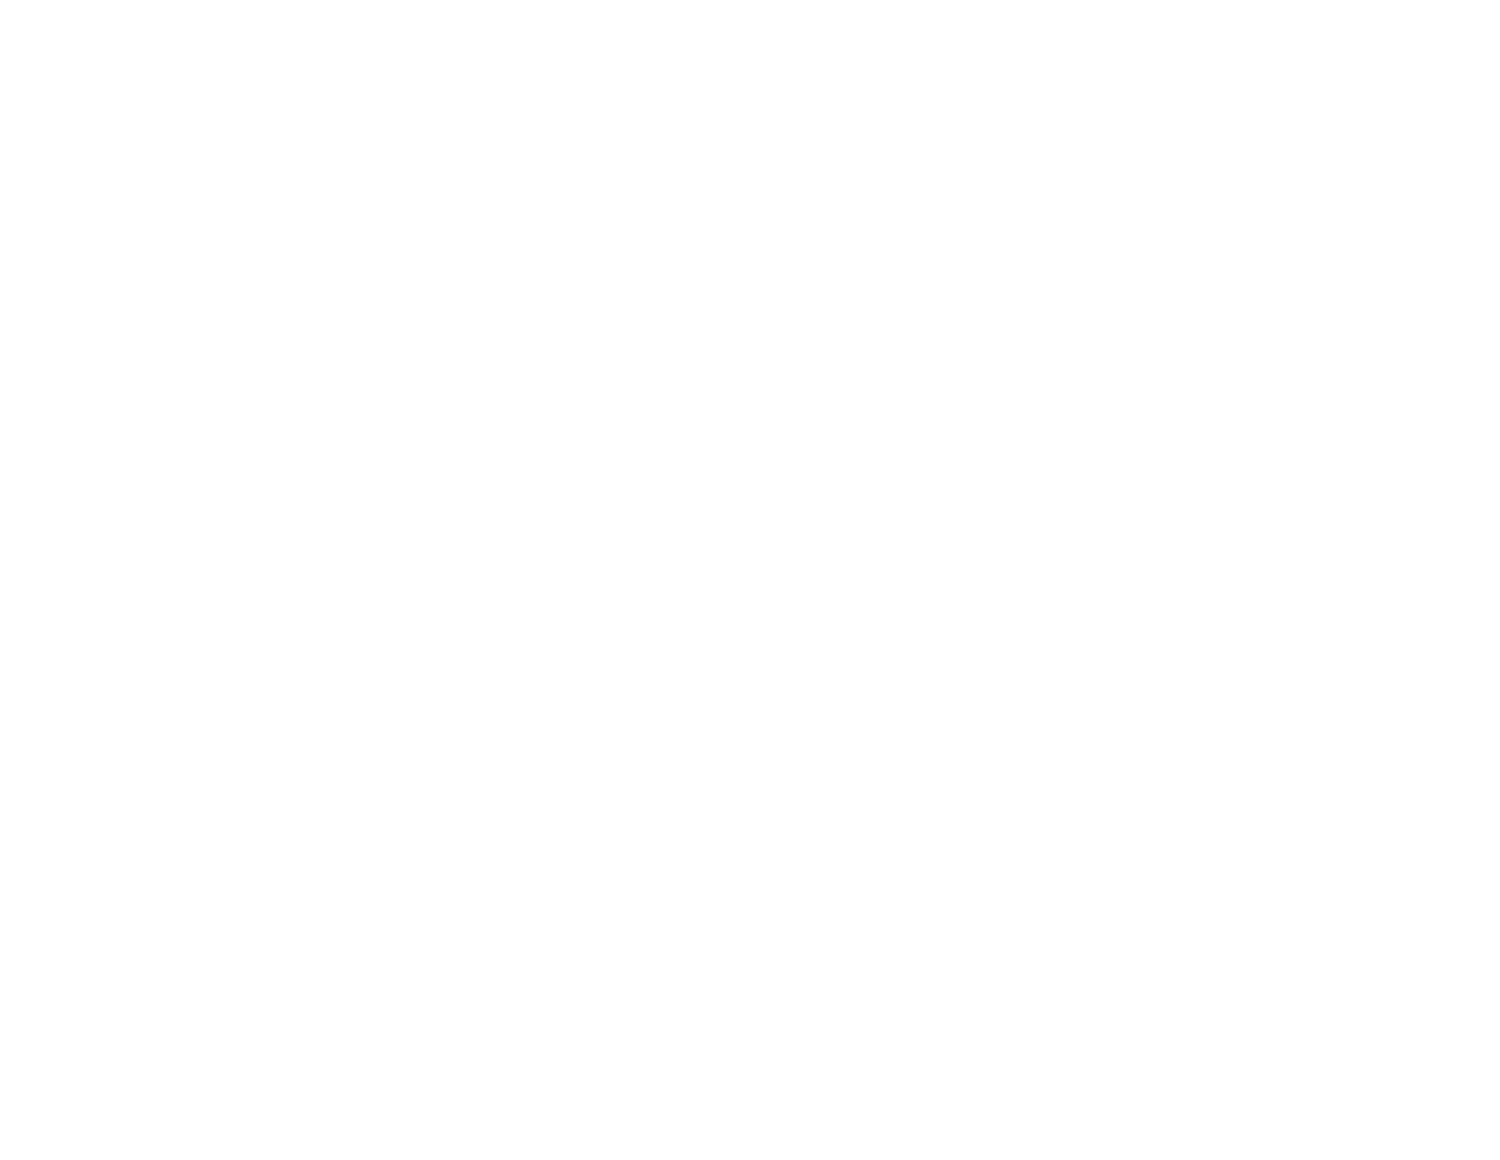 WildLawn